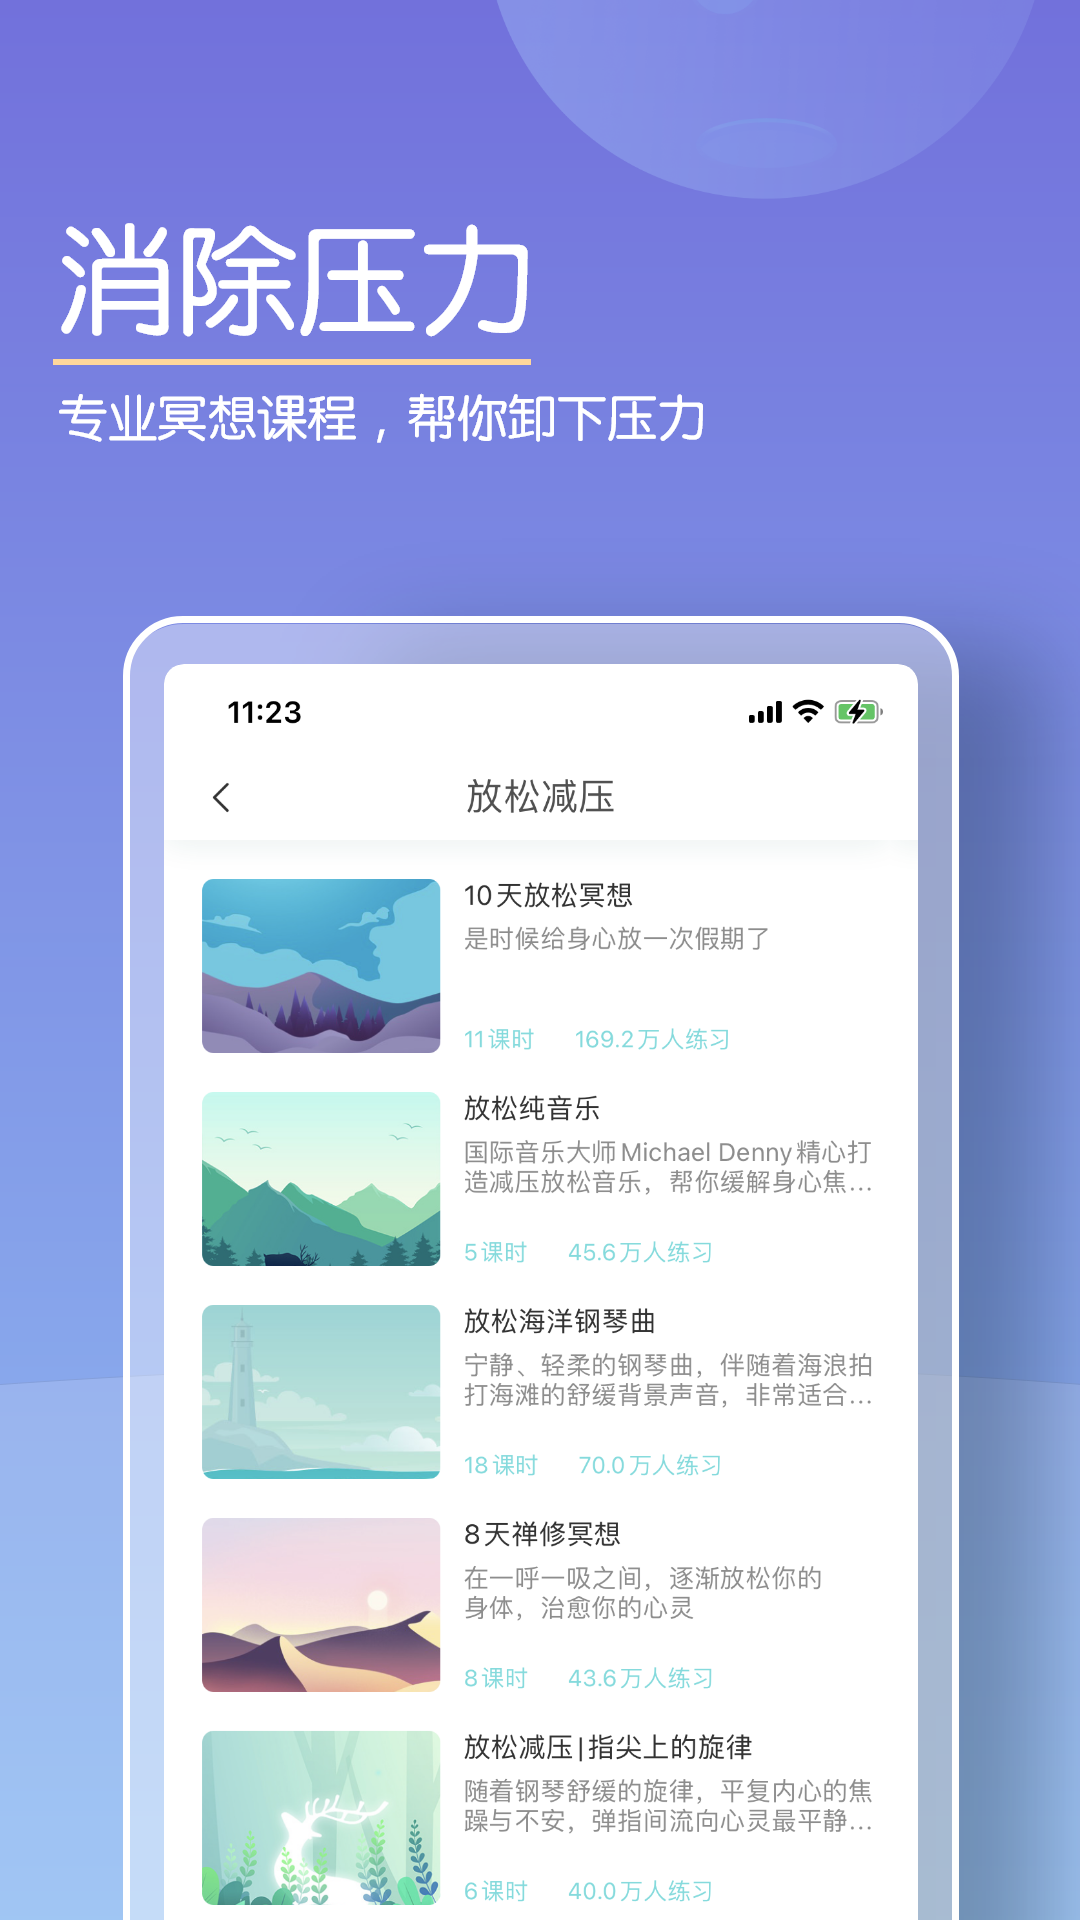 Now冥想app4.5.7